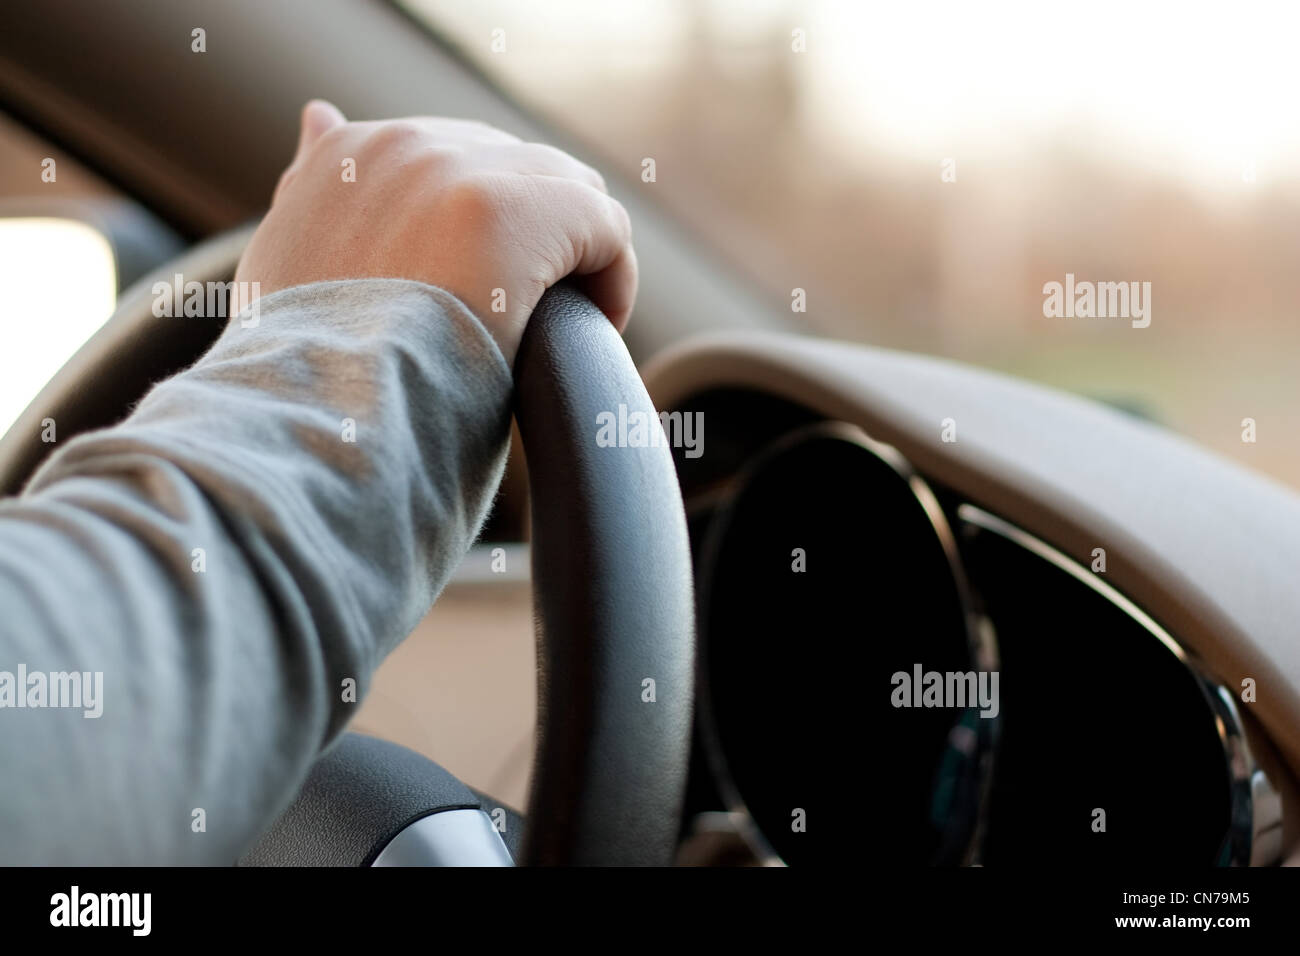 Auto lenkrad -Fotos und -Bildmaterial in hoher Auflösung – Alamy